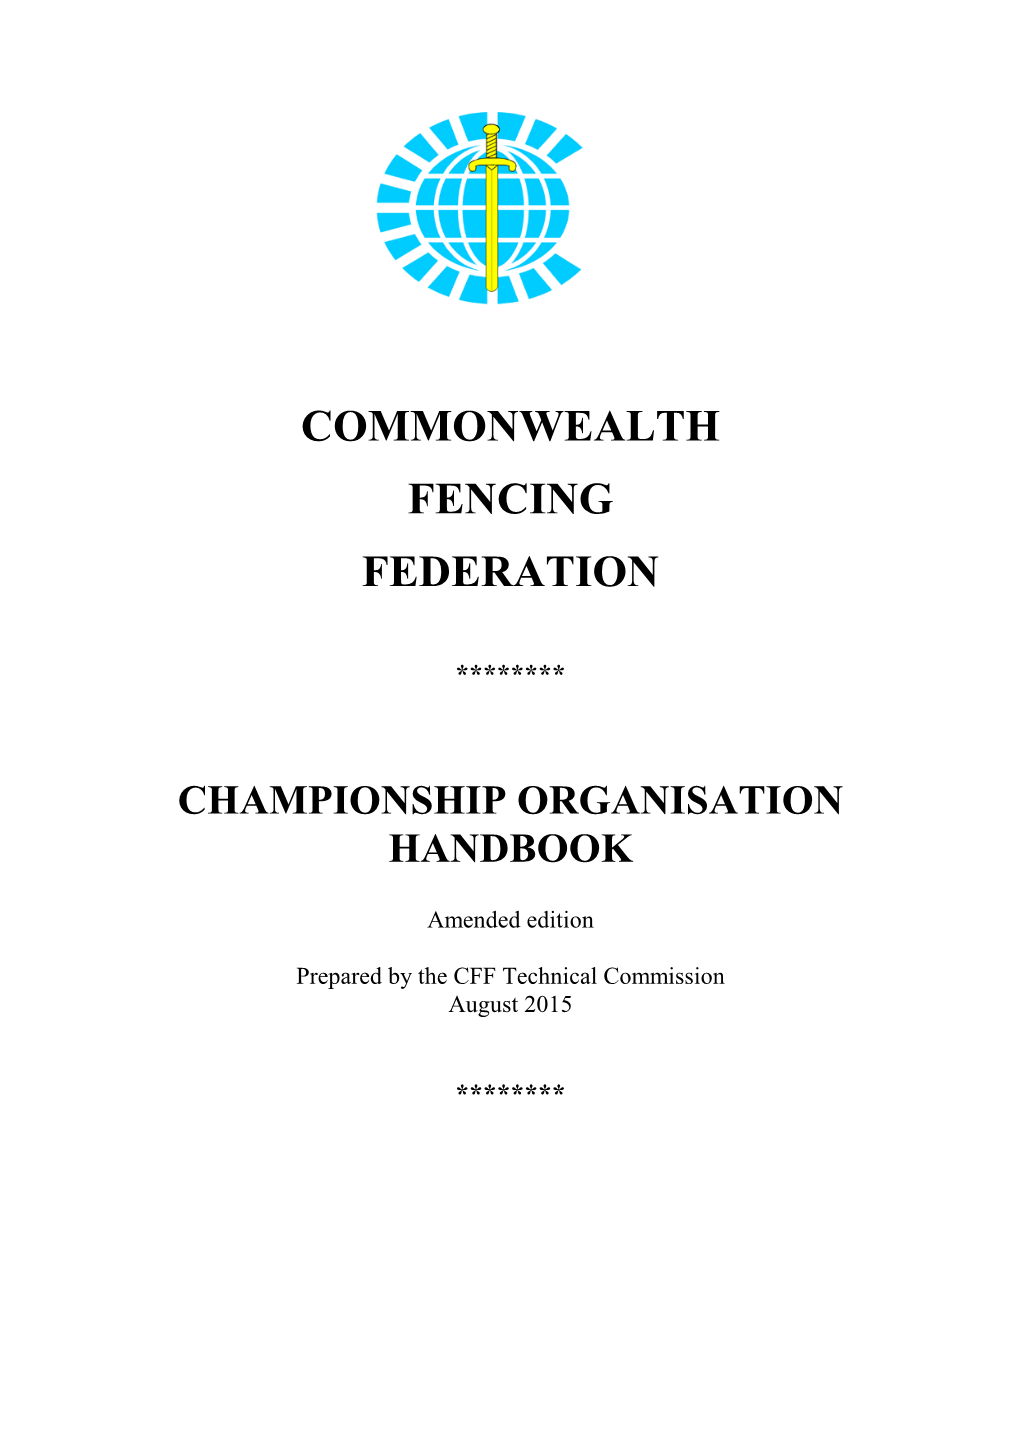 Commonwealth Fencing Federation ******** Championship Organisation